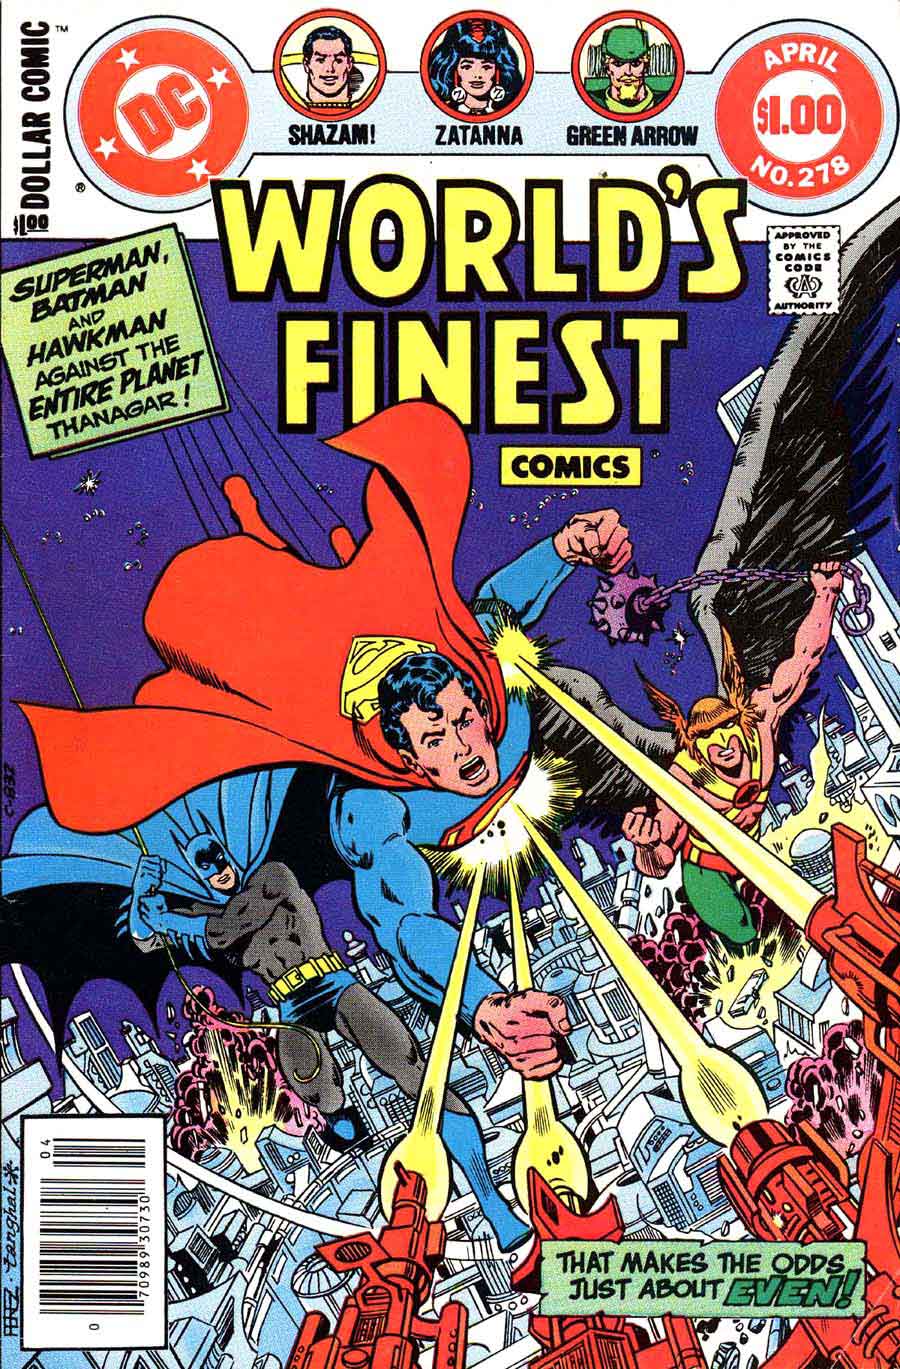 George Perez dc batman superman 1980s comic book cover - World's Finest Comics #278